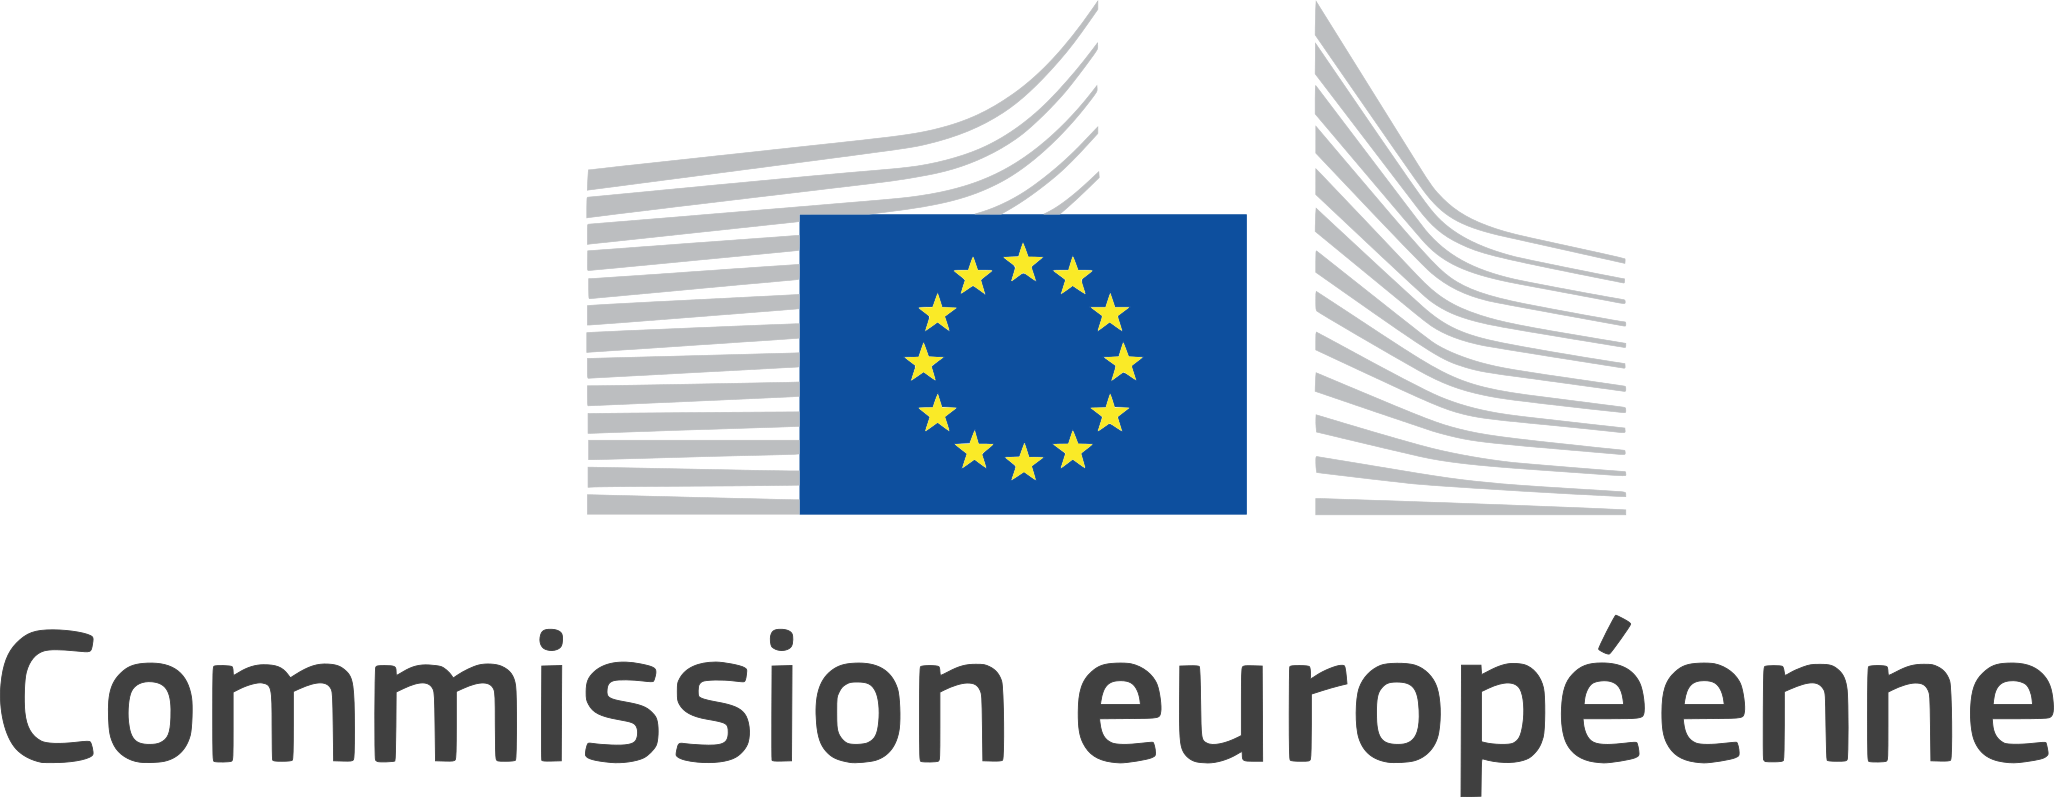 2054px-Commission_Européenne_FR.png